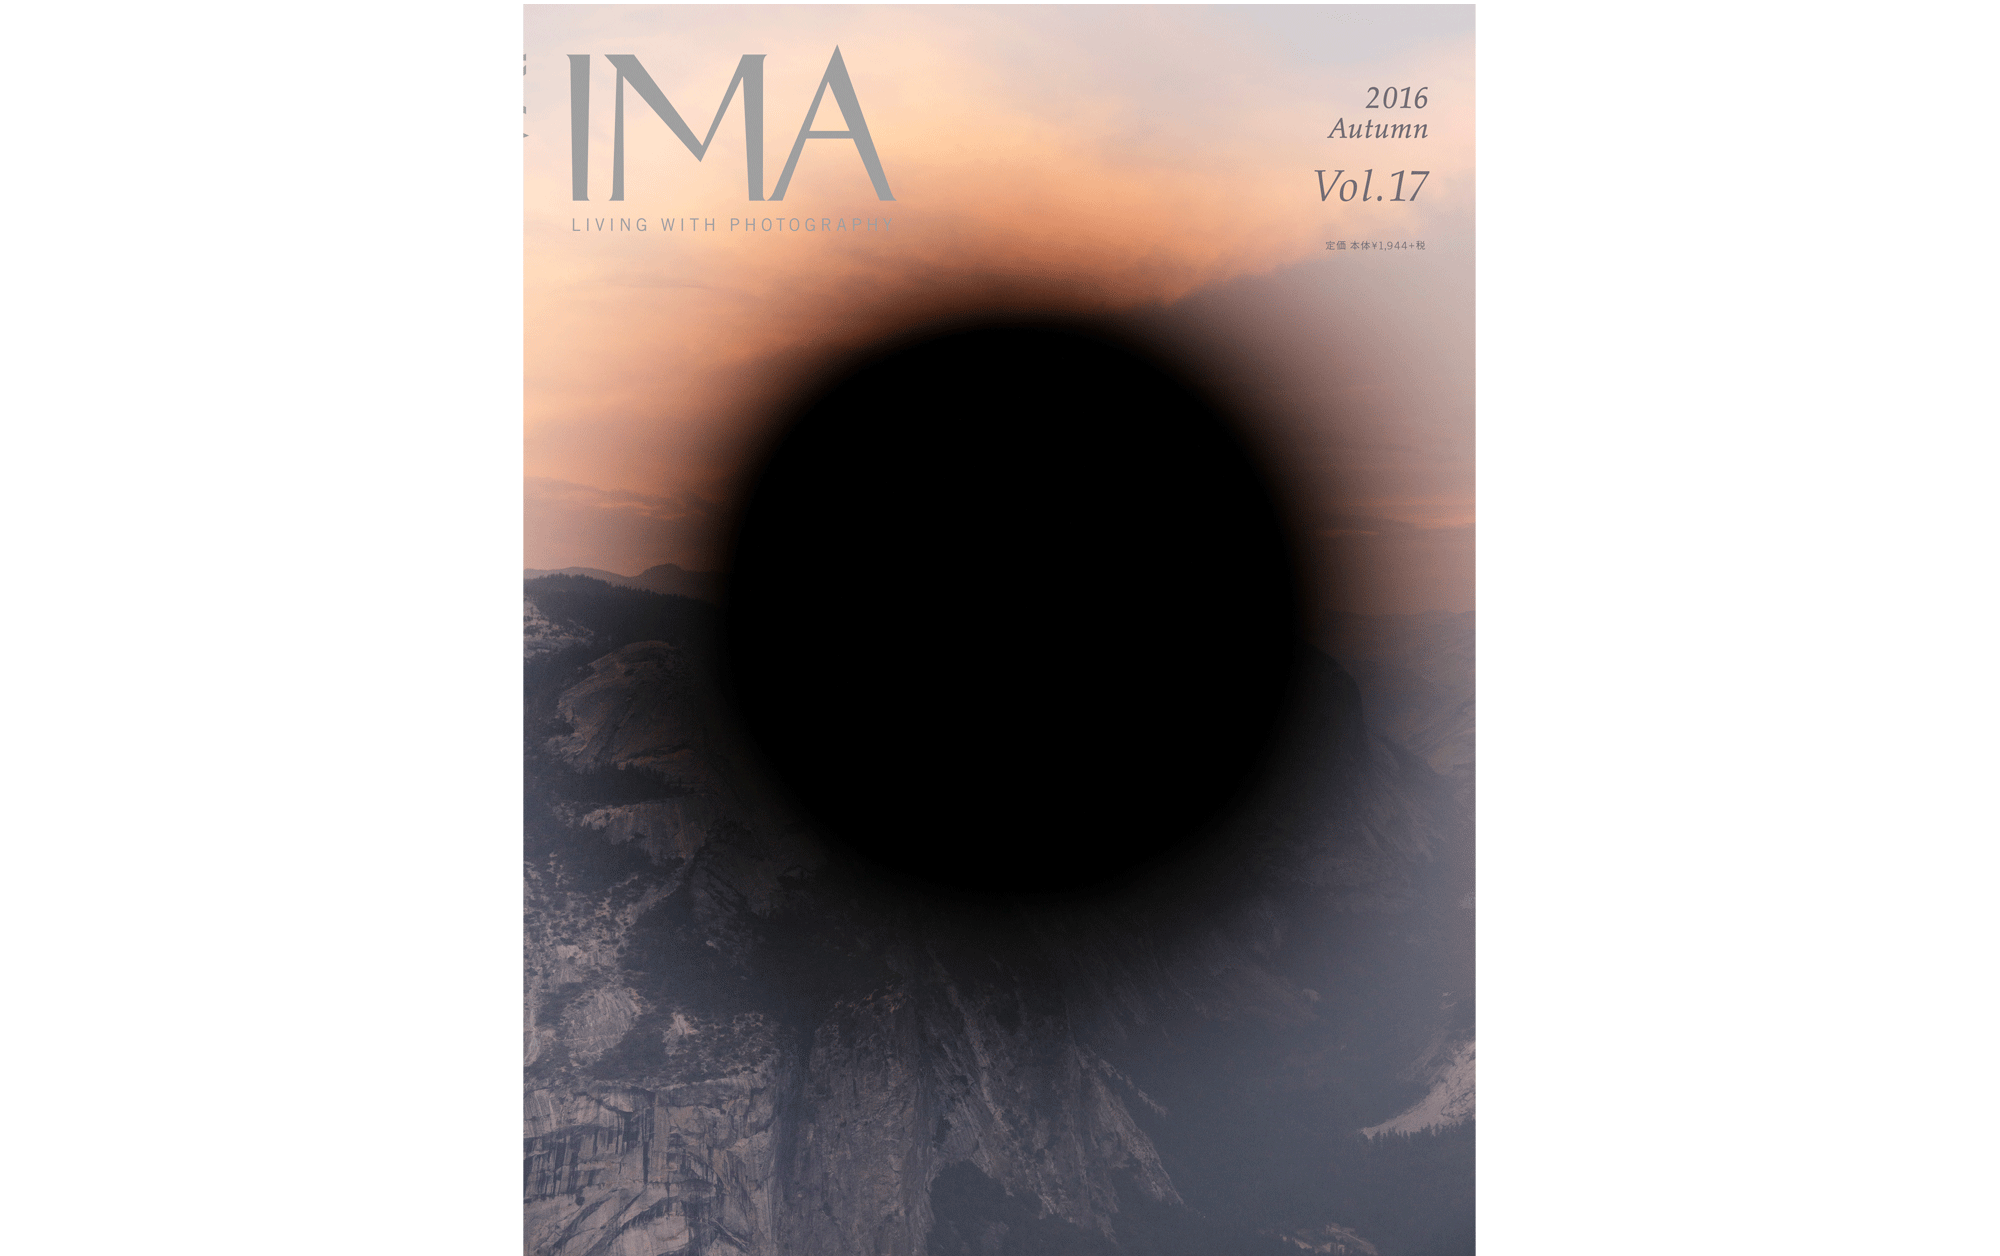 IMA 2016 Autumn Vol.17 | Event | IMA ONLINE